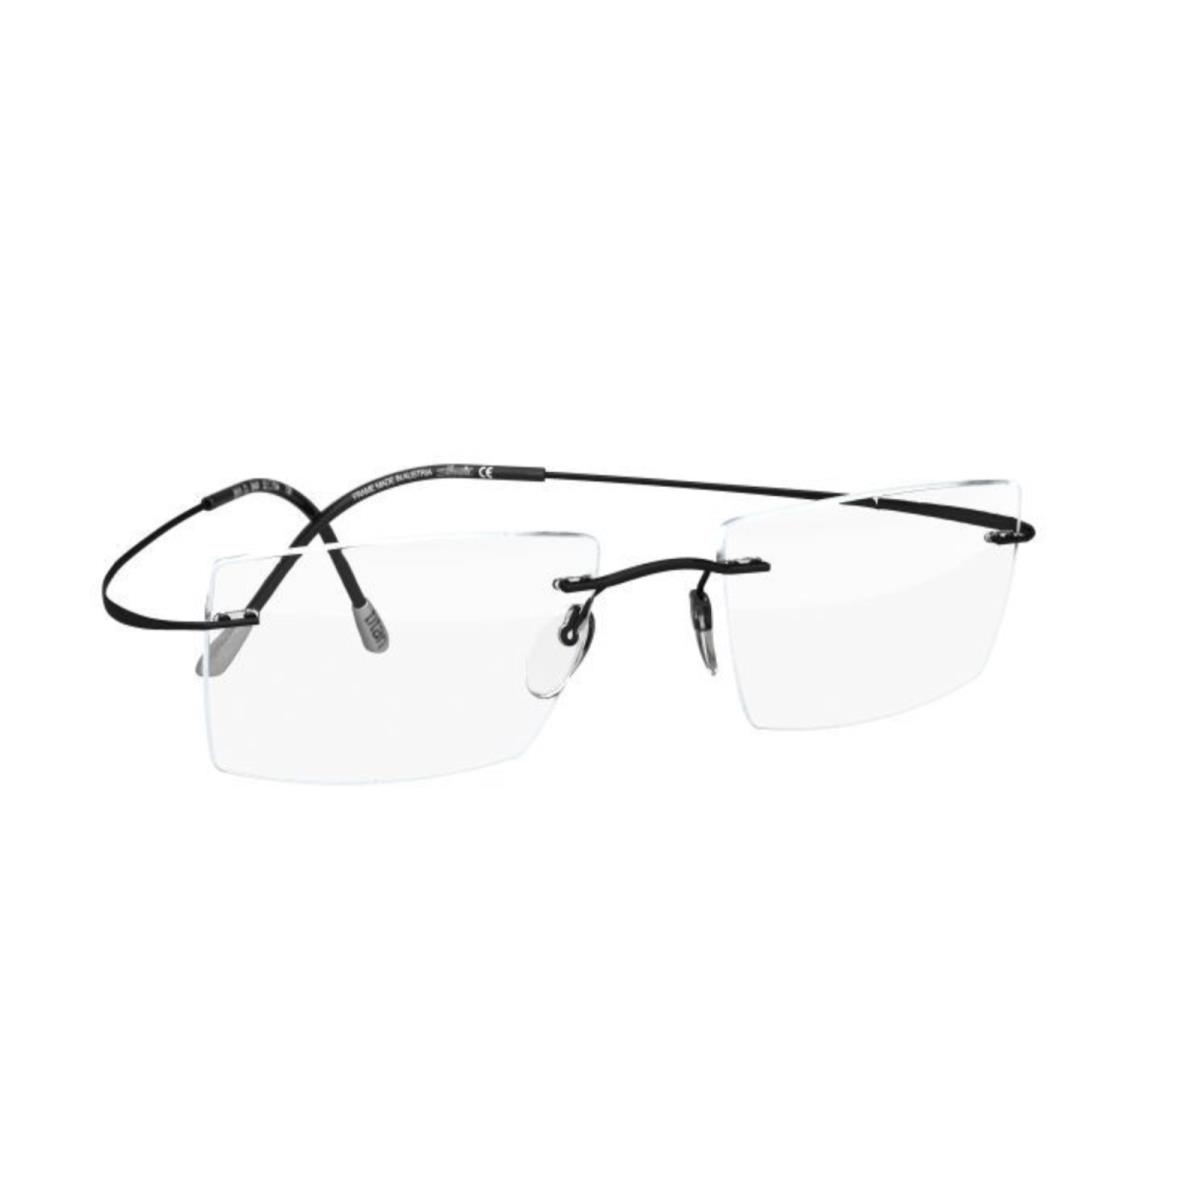 Silhouette Rimless Eyeglasses Titan Minimal Art The Must Collection Frames JET BLACK - 9040, SIZE: 52-19 150, LENS SHAPE - CL